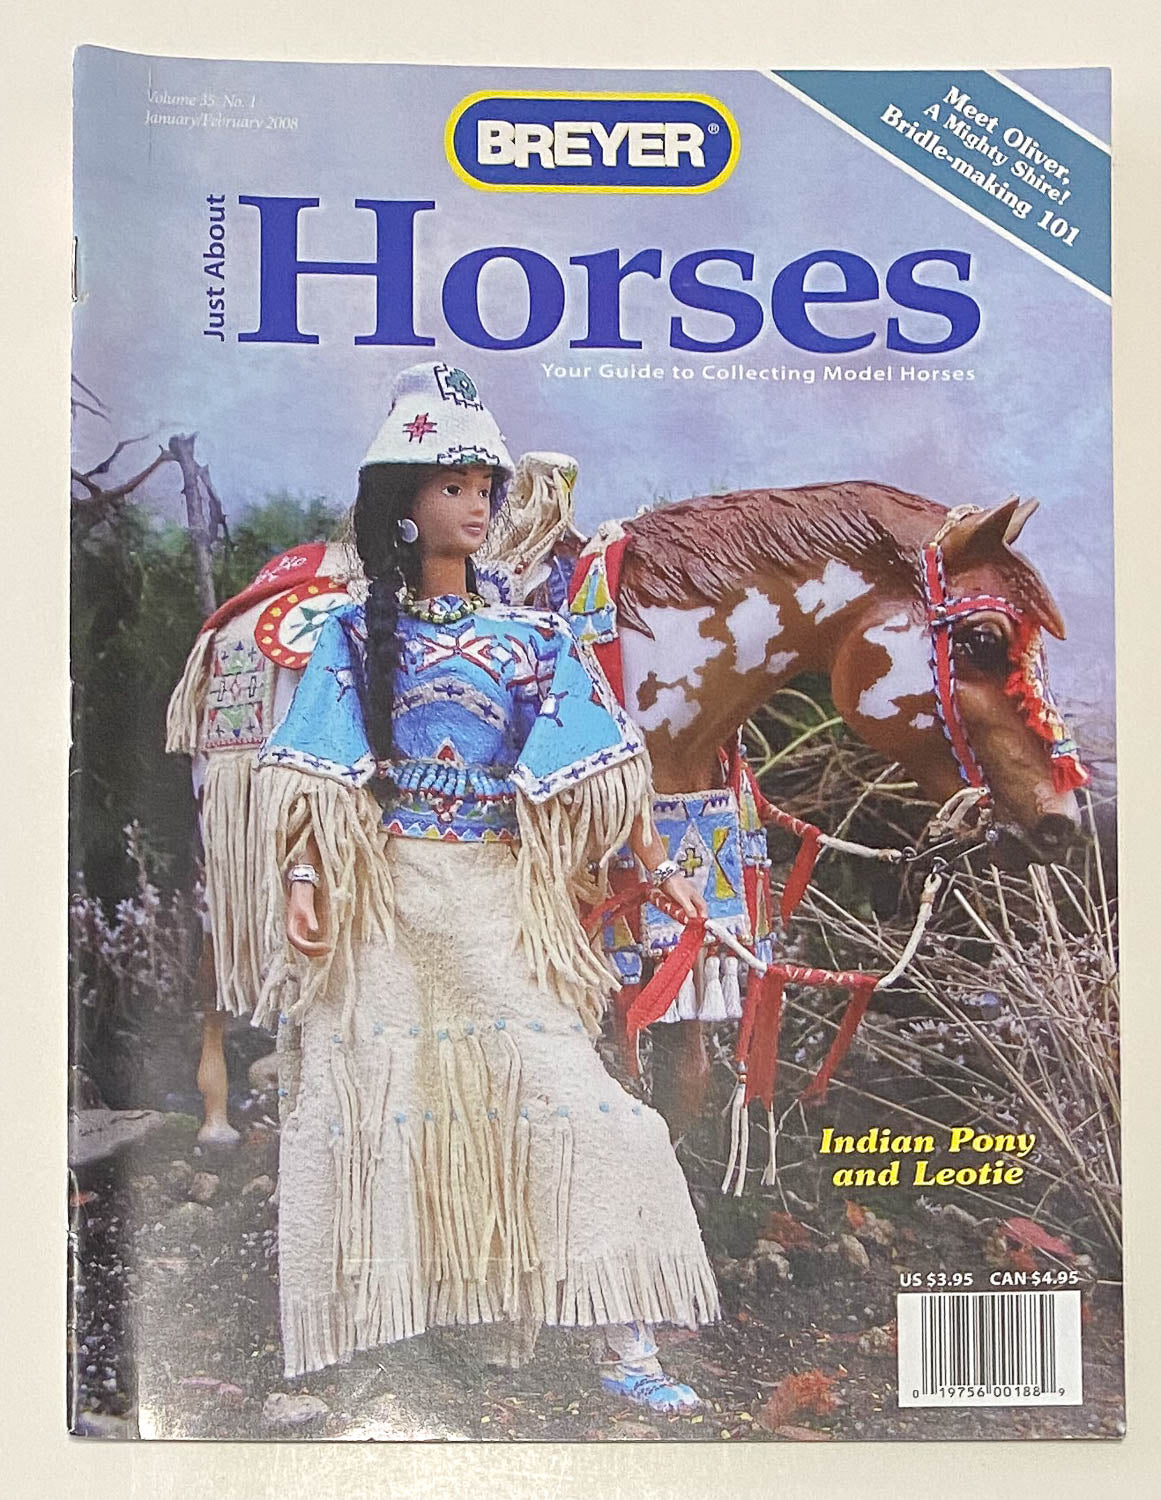 Just About Horses Magazine Vol. 35, No. 1, 2008 Jan/Feb